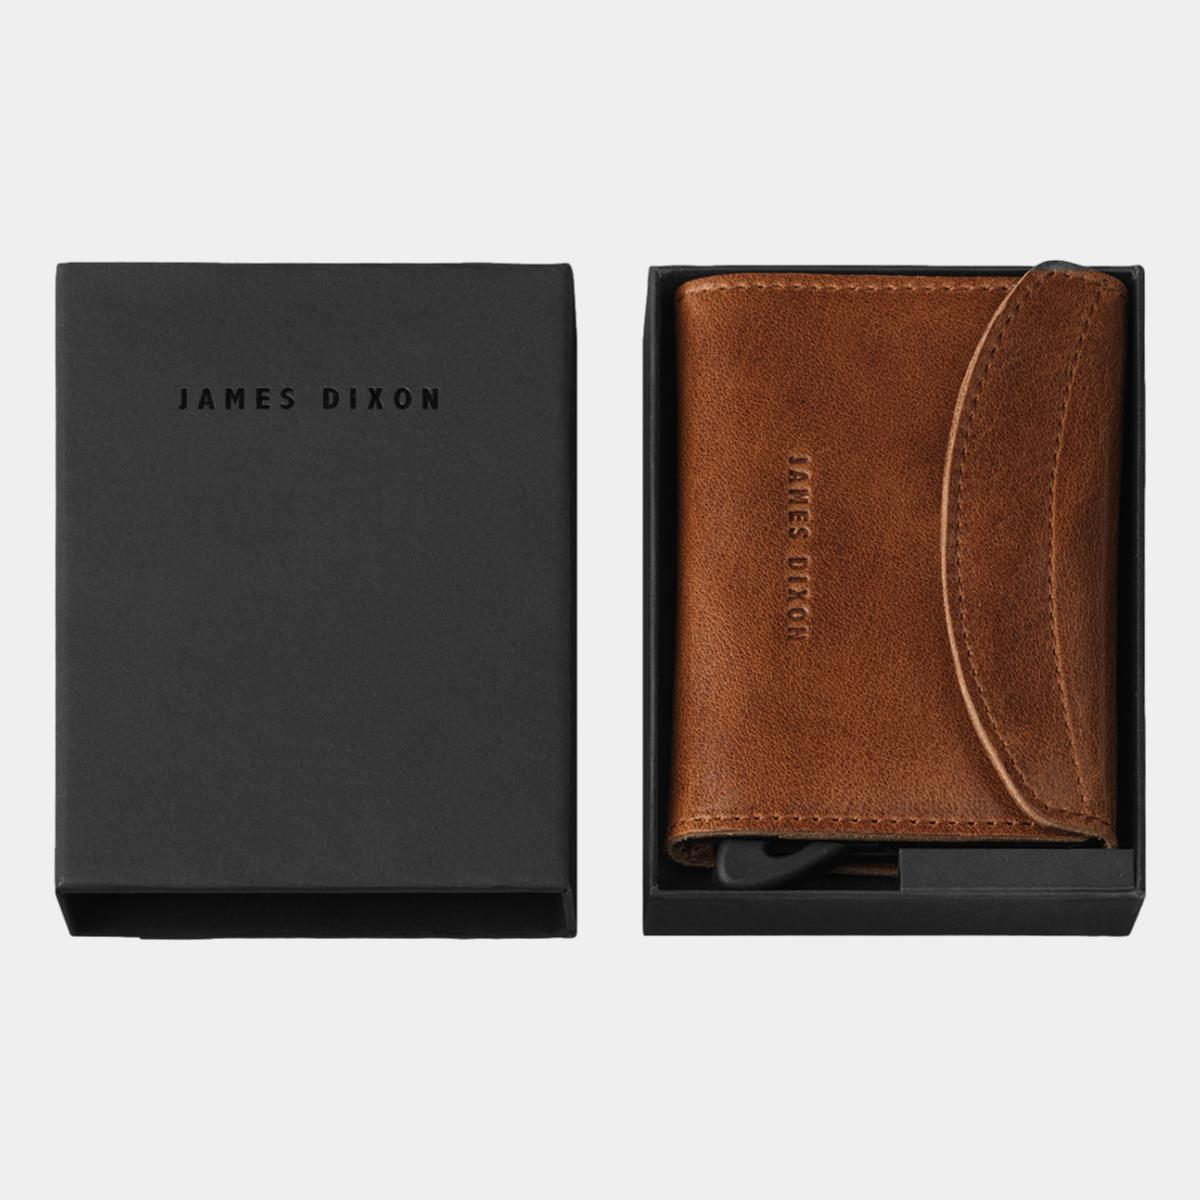 jd0108 james dixon grande classic havana brown coin pocket wallet box